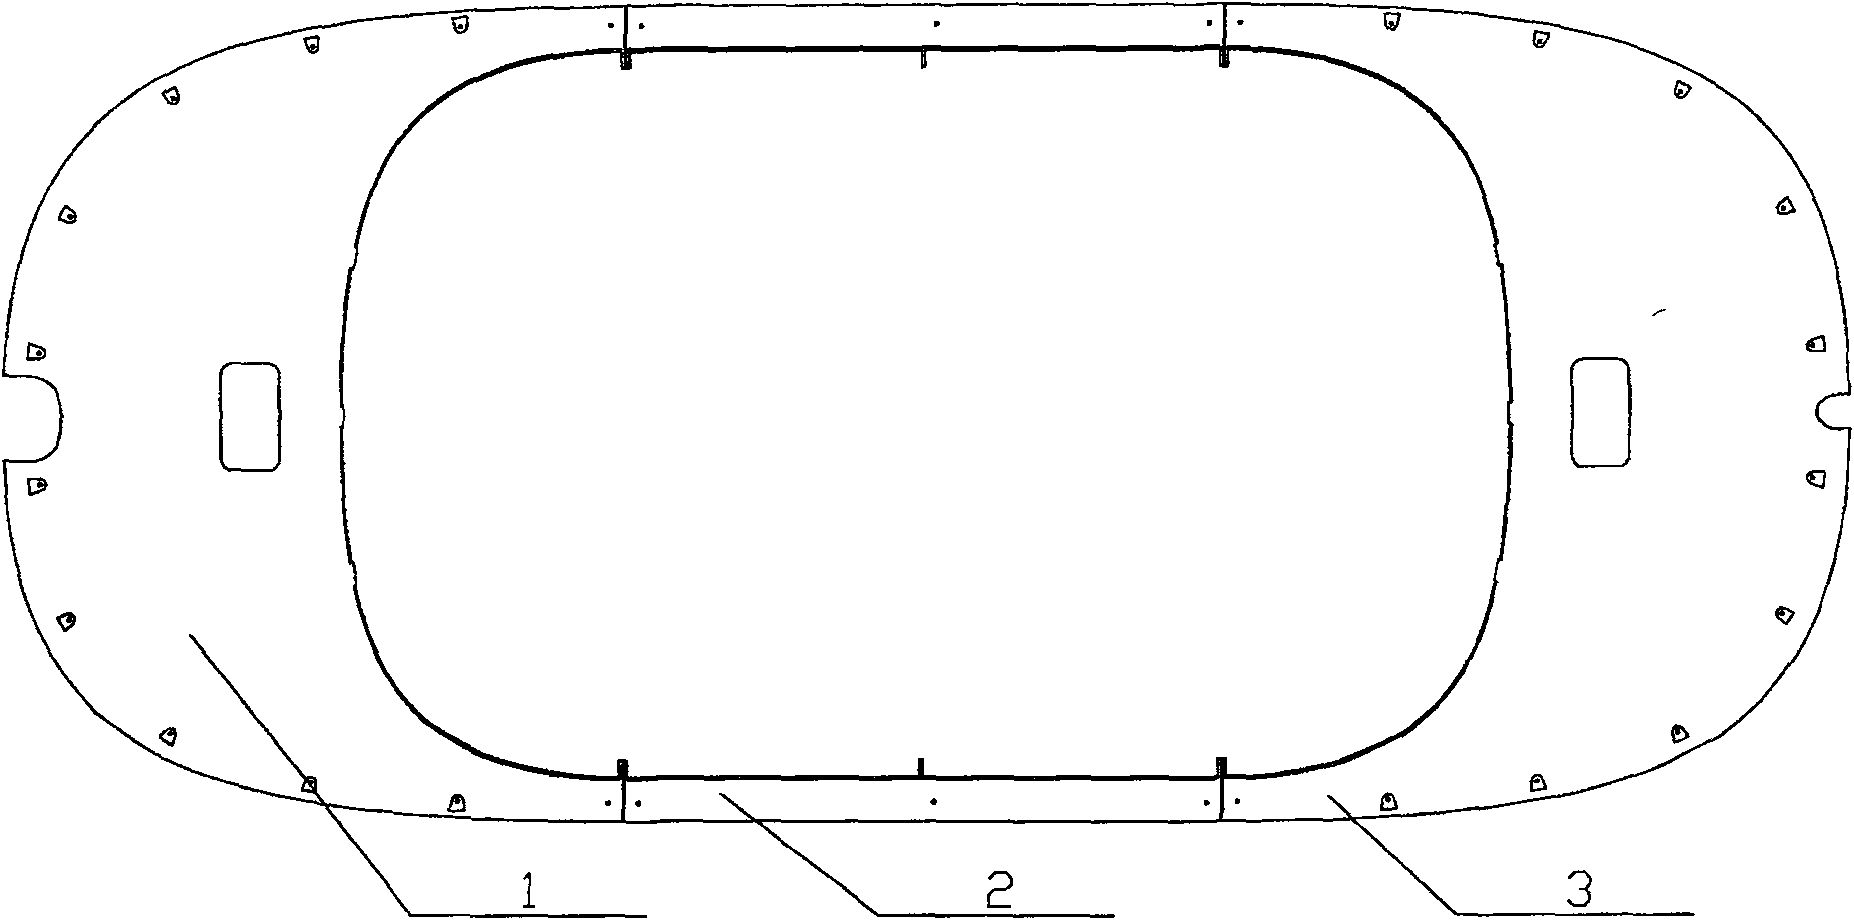 Pantograph flow guiding device of rail vehicle